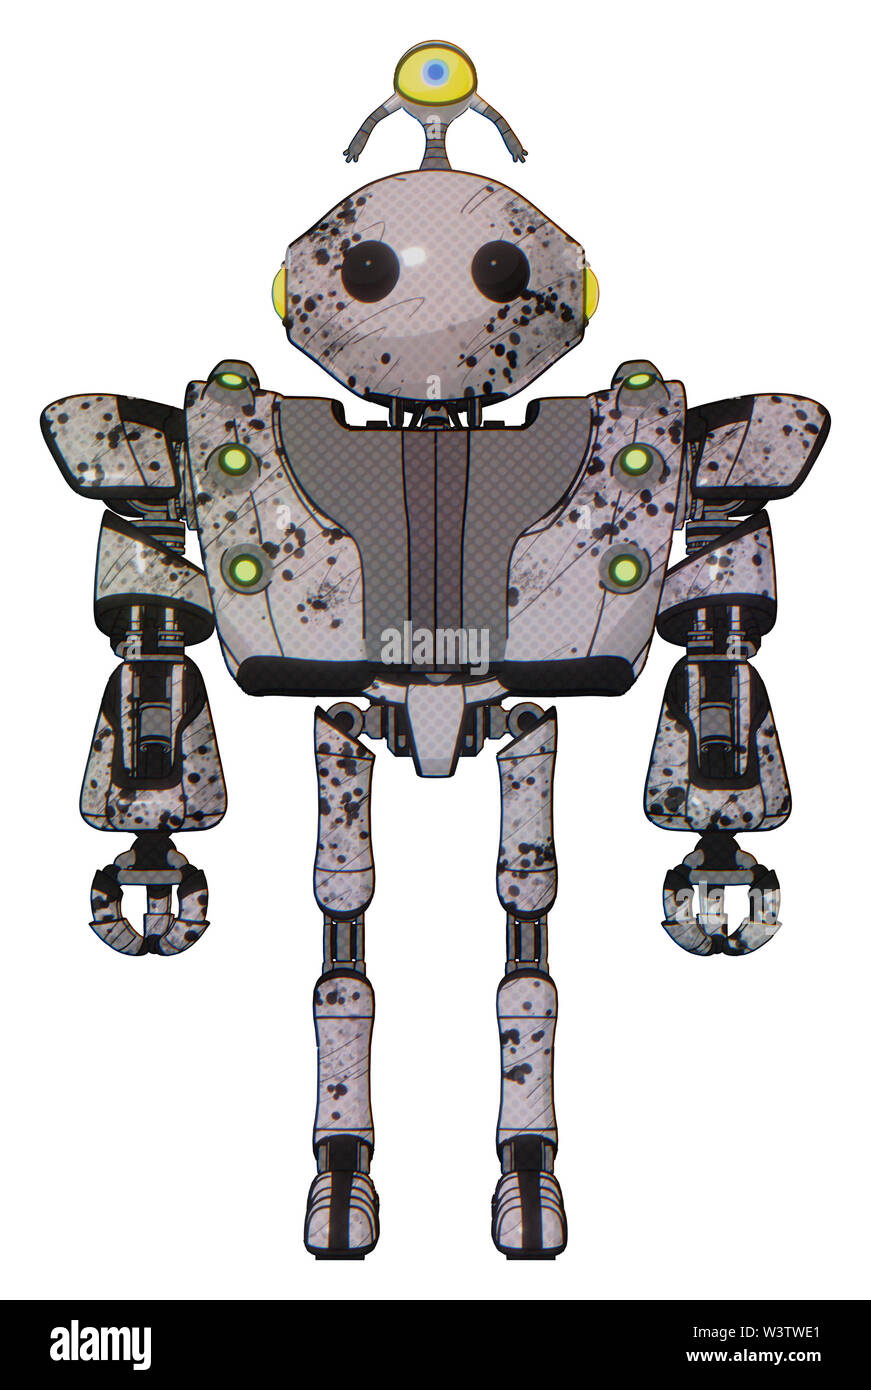 Cyborg Elemente enthalten: Oval breiter Kopf, beady schwarze Augen, Minibot Ornament, schwere obere Brust, schwere mech Brust, grünes Kabel steckdosen Array,... Stockfoto